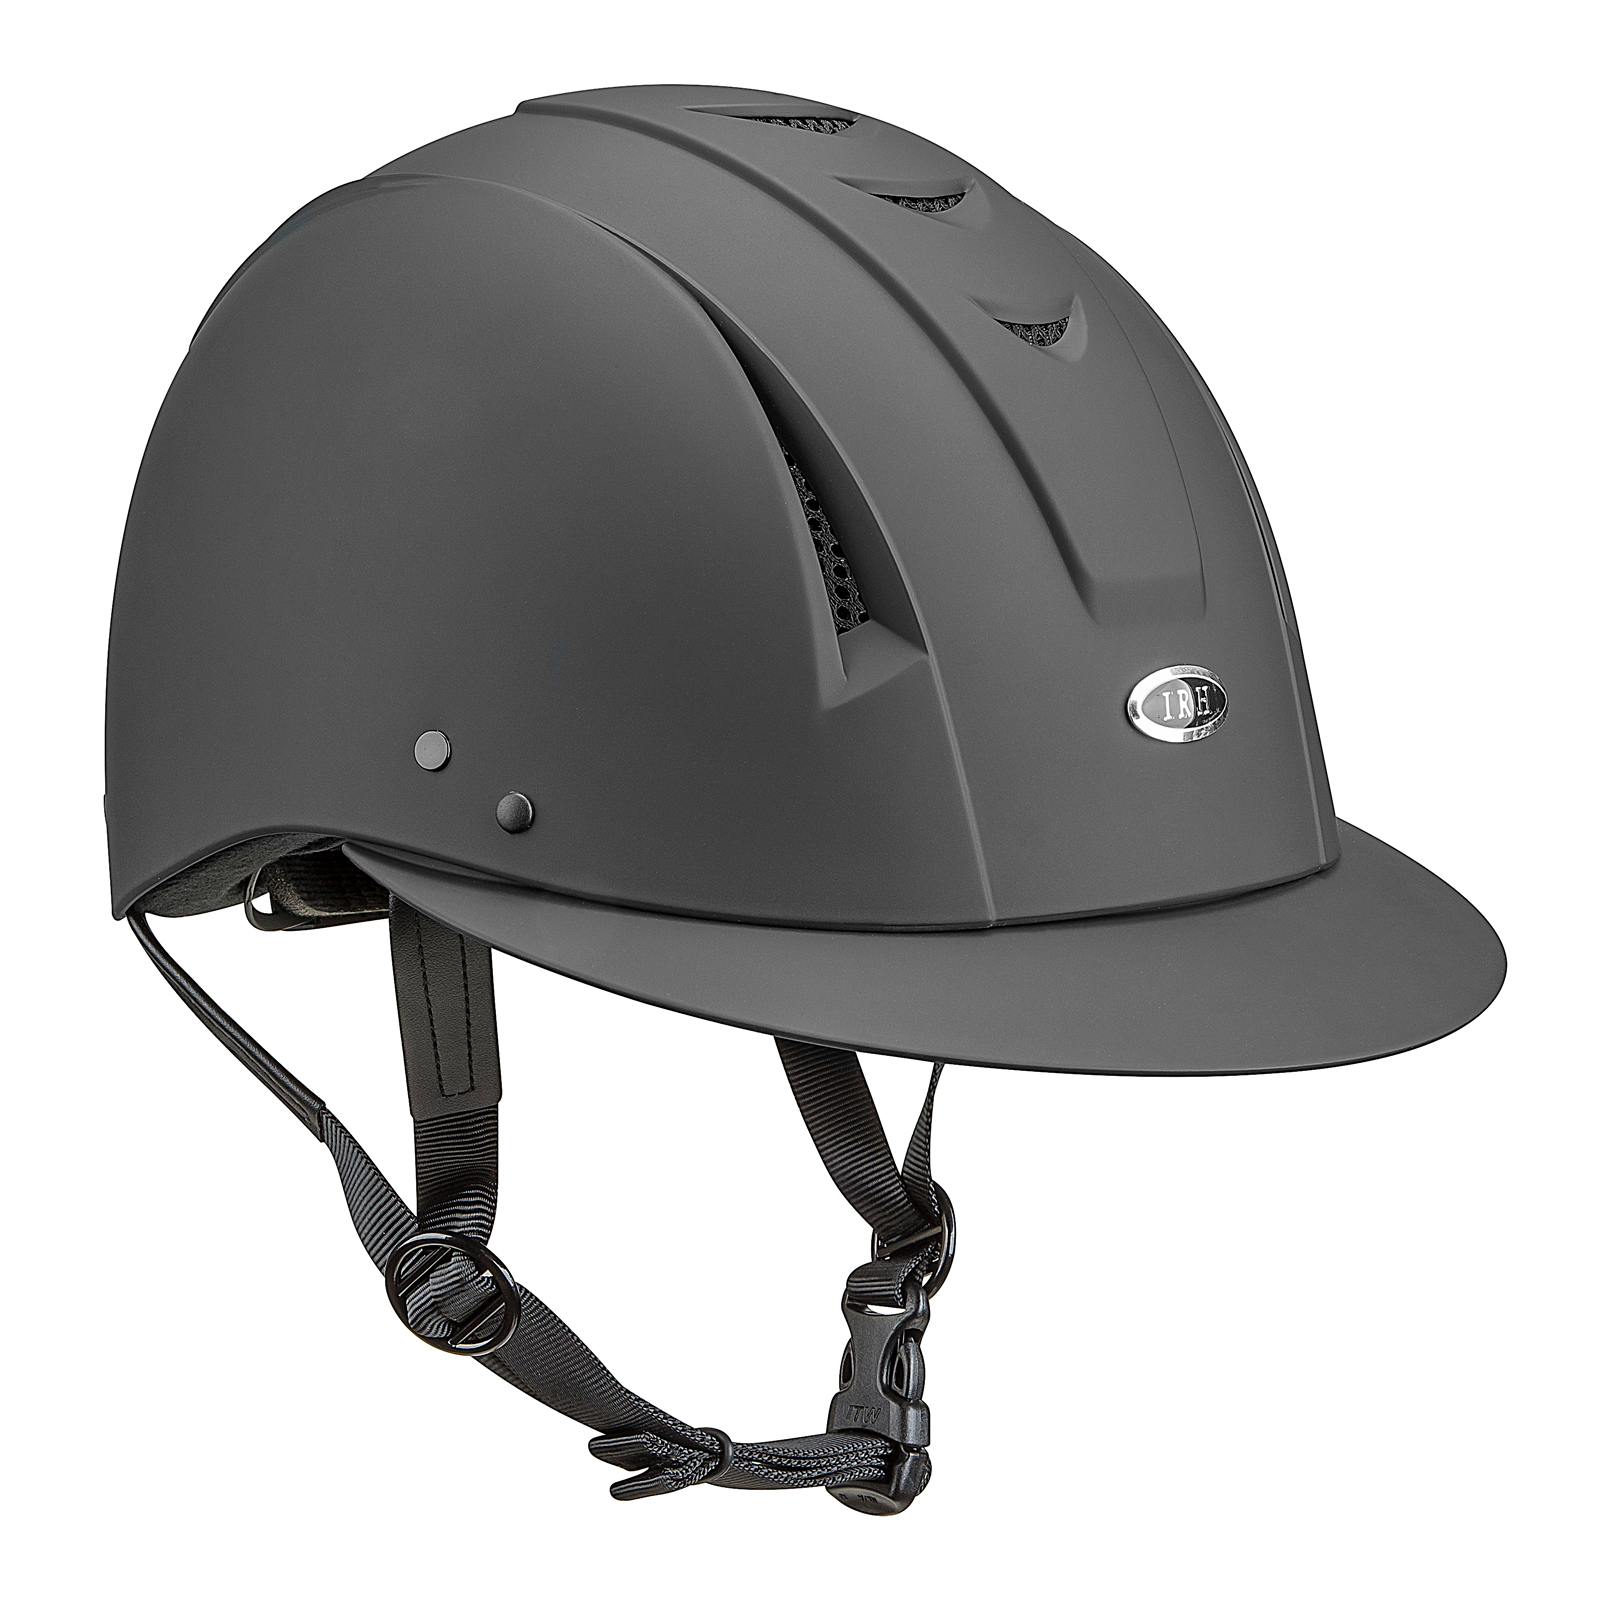 IRH Equi-Pro Sun Visor Helmet